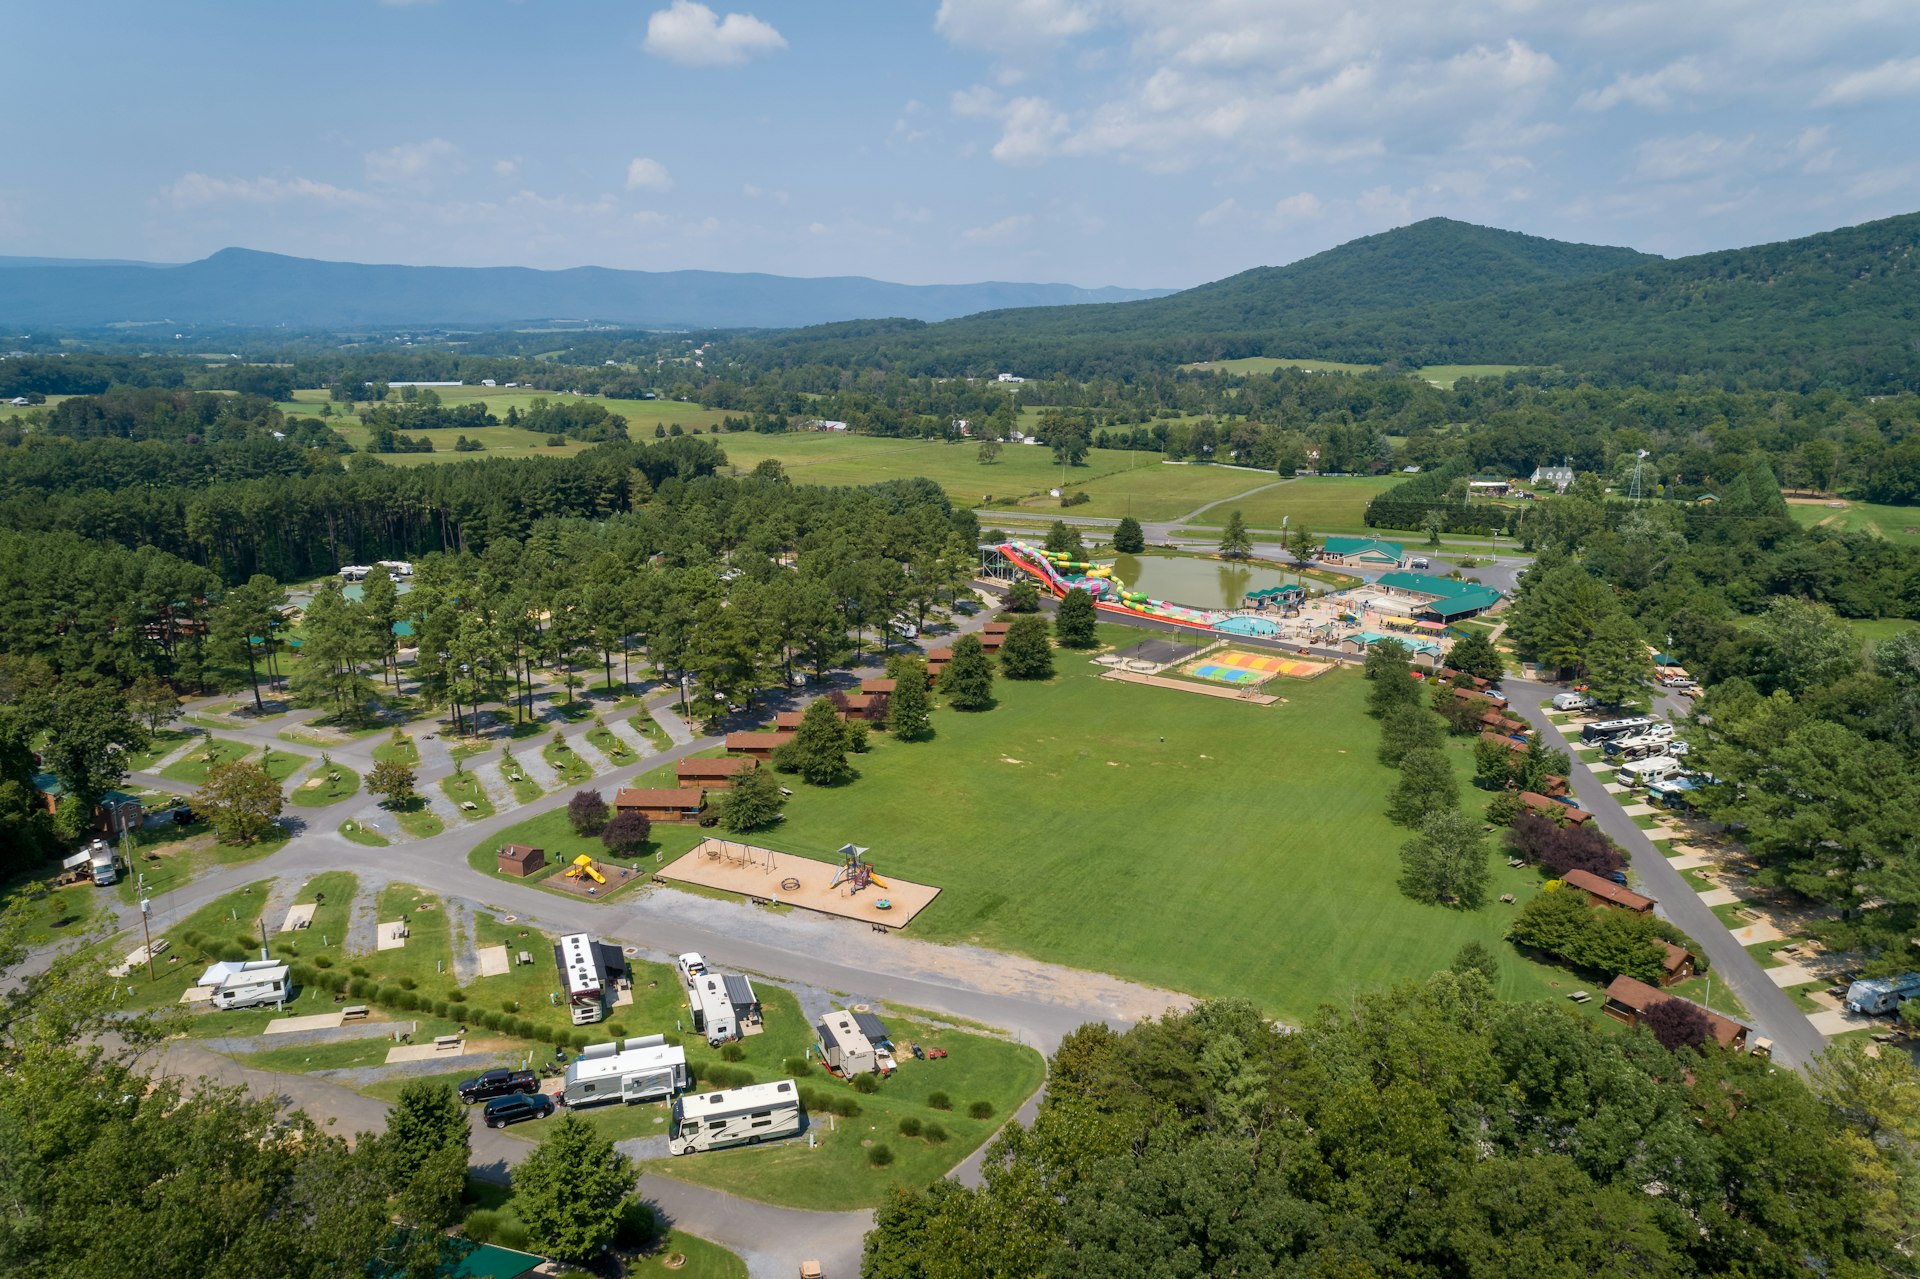 An aerial view of Yogi Bear's Jellystone Park Camp-Resort in Luray, Virginia